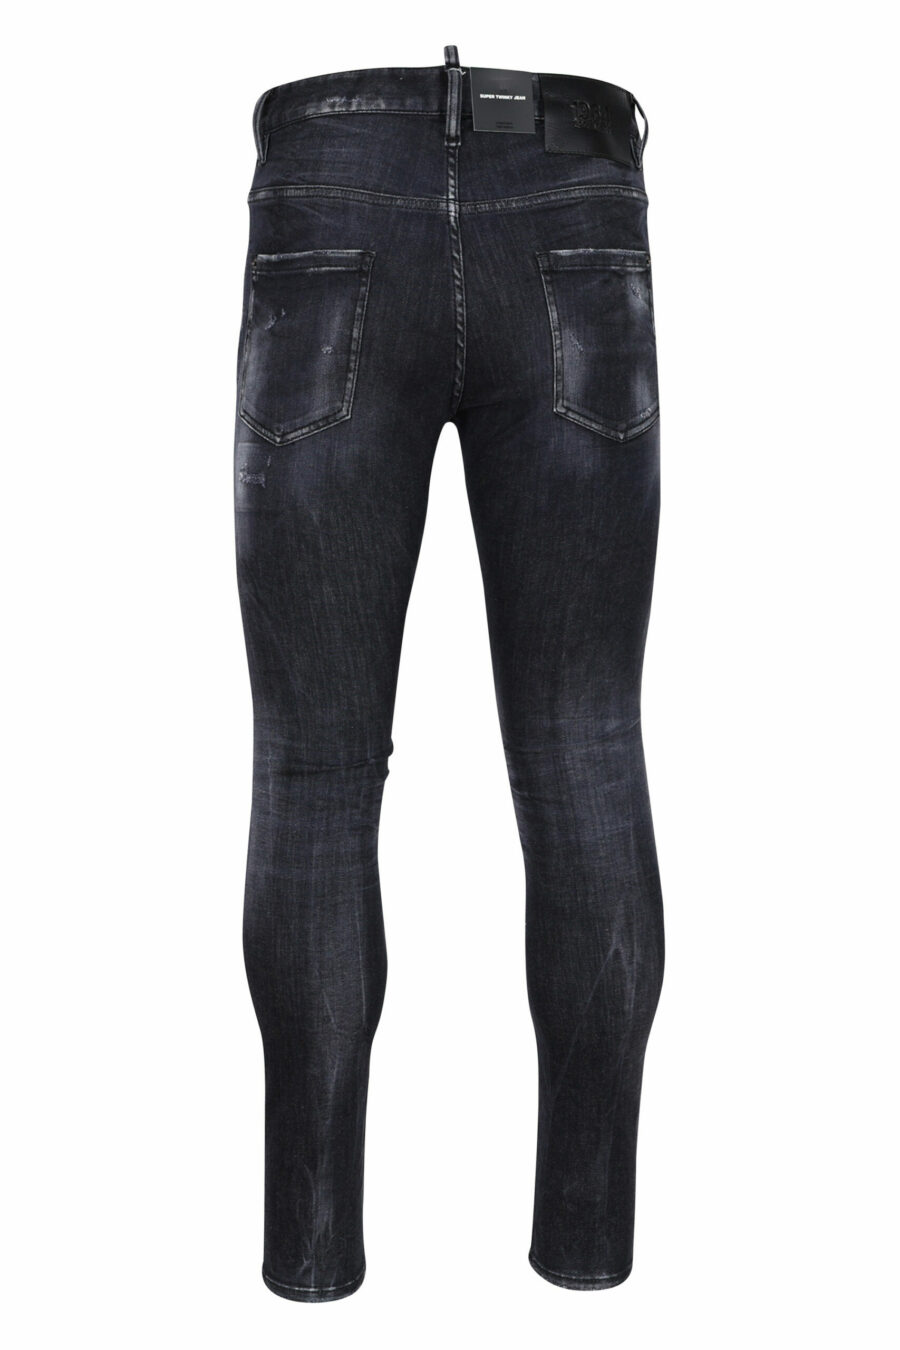 Super twinkey jeans black semi-worn and ripped - 8054148103088 2 scaled